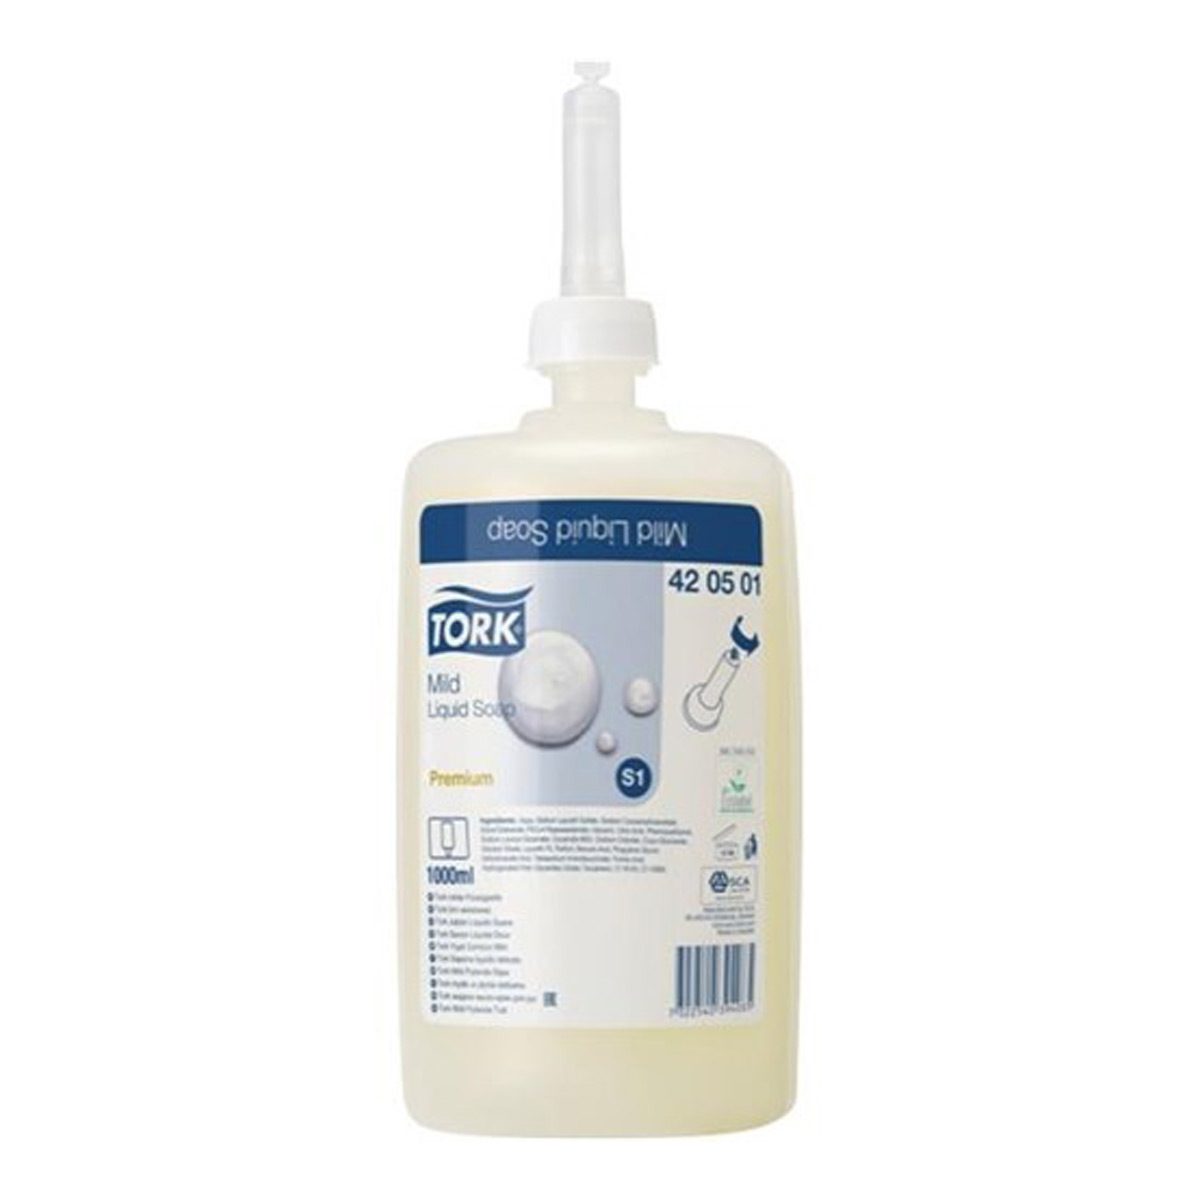 washroom-skincare-hand-soap-tork-mild-liquid-premium-soap-1L-litre-100ml-s1-all-purpose-soap-fresh-scent-moisturising-and-replenishing-ingredients-good-hand-hygiene-vjs-distributors-420501